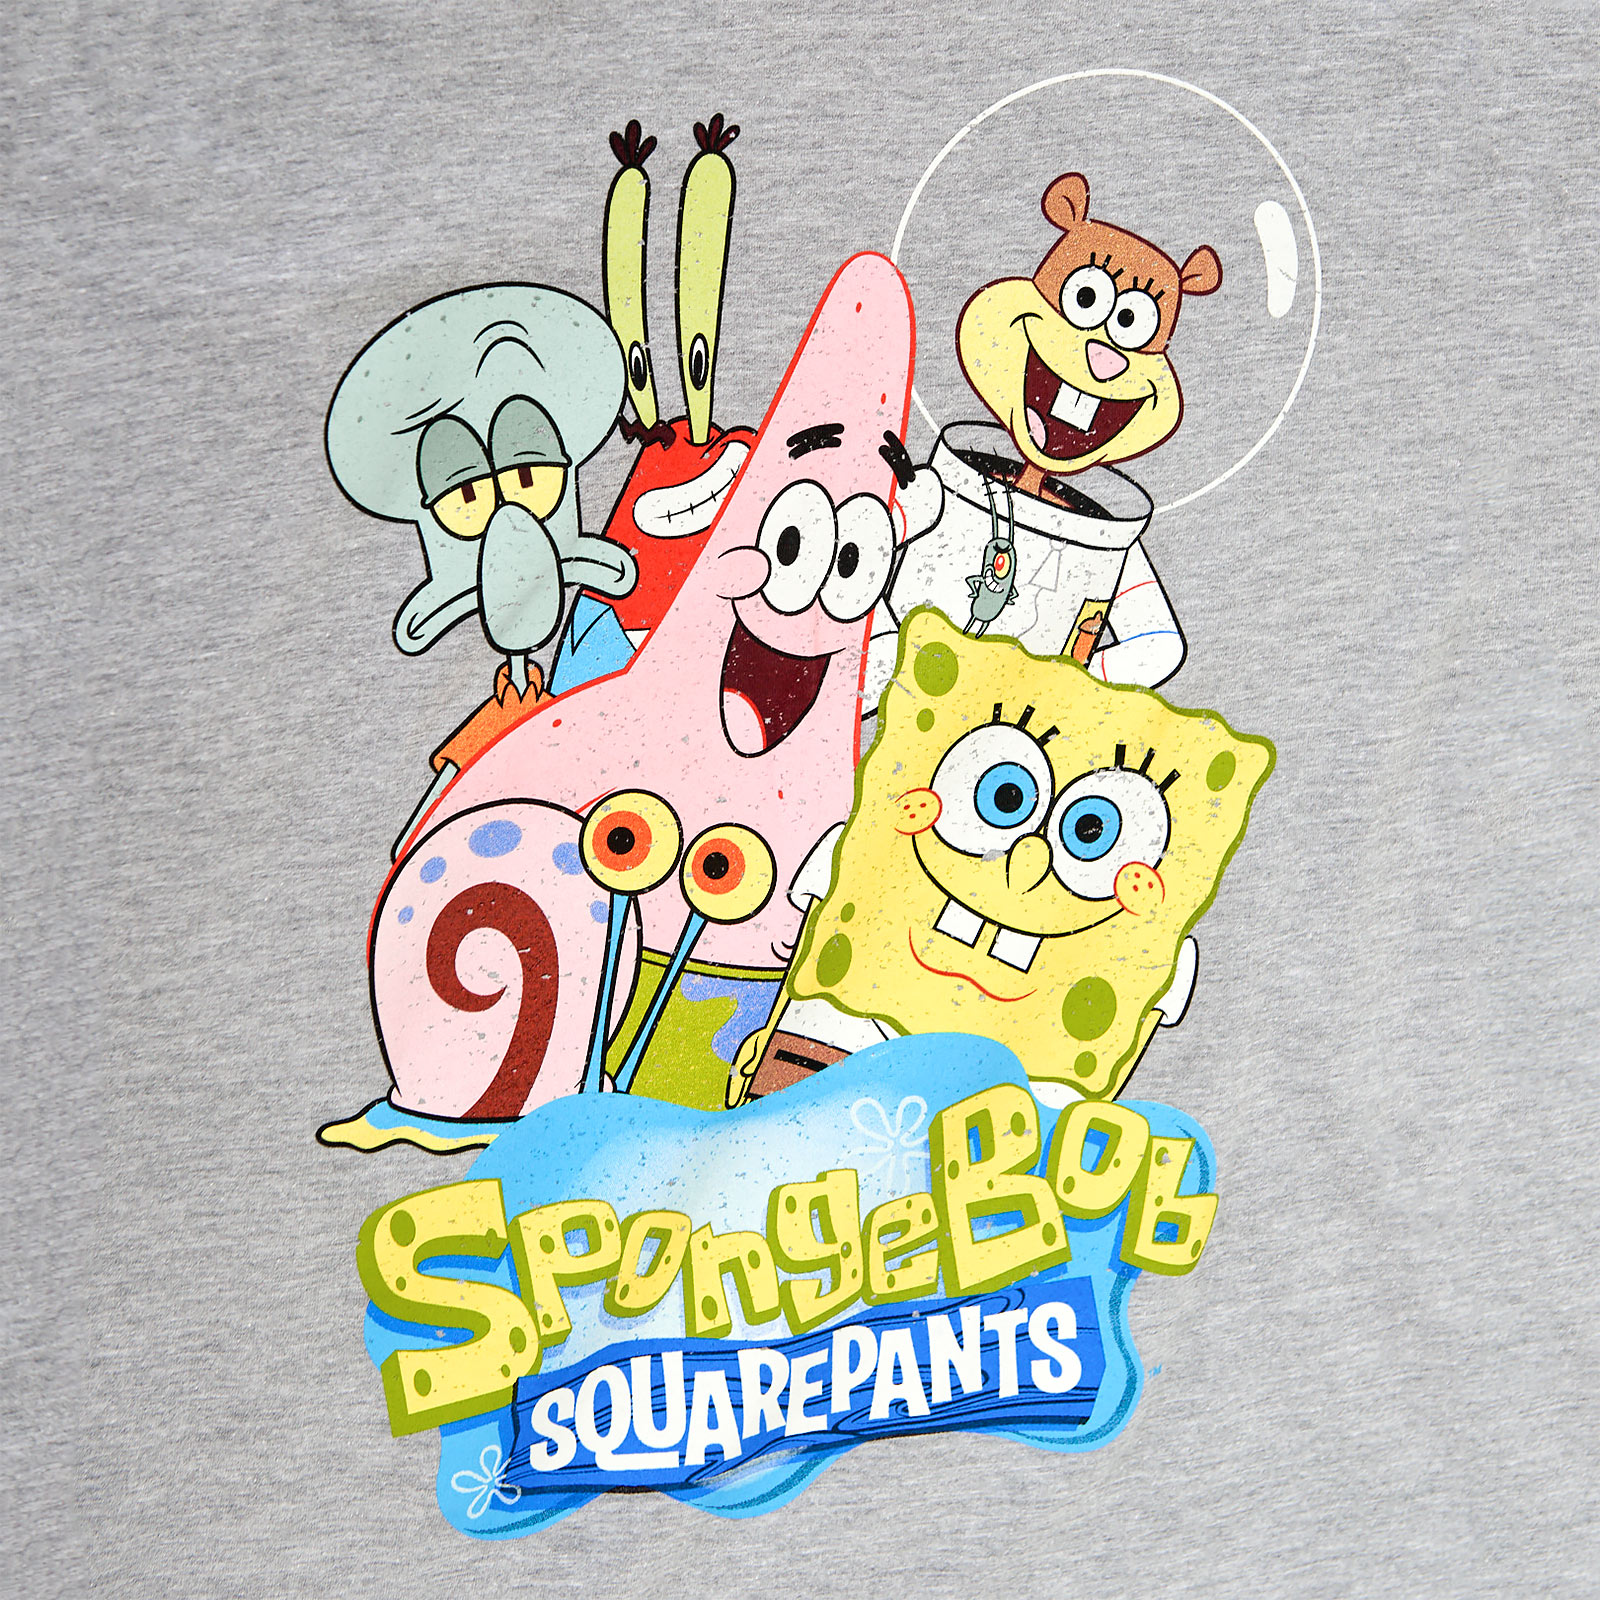 SpongeBob - Friends Together T-Shirt grey